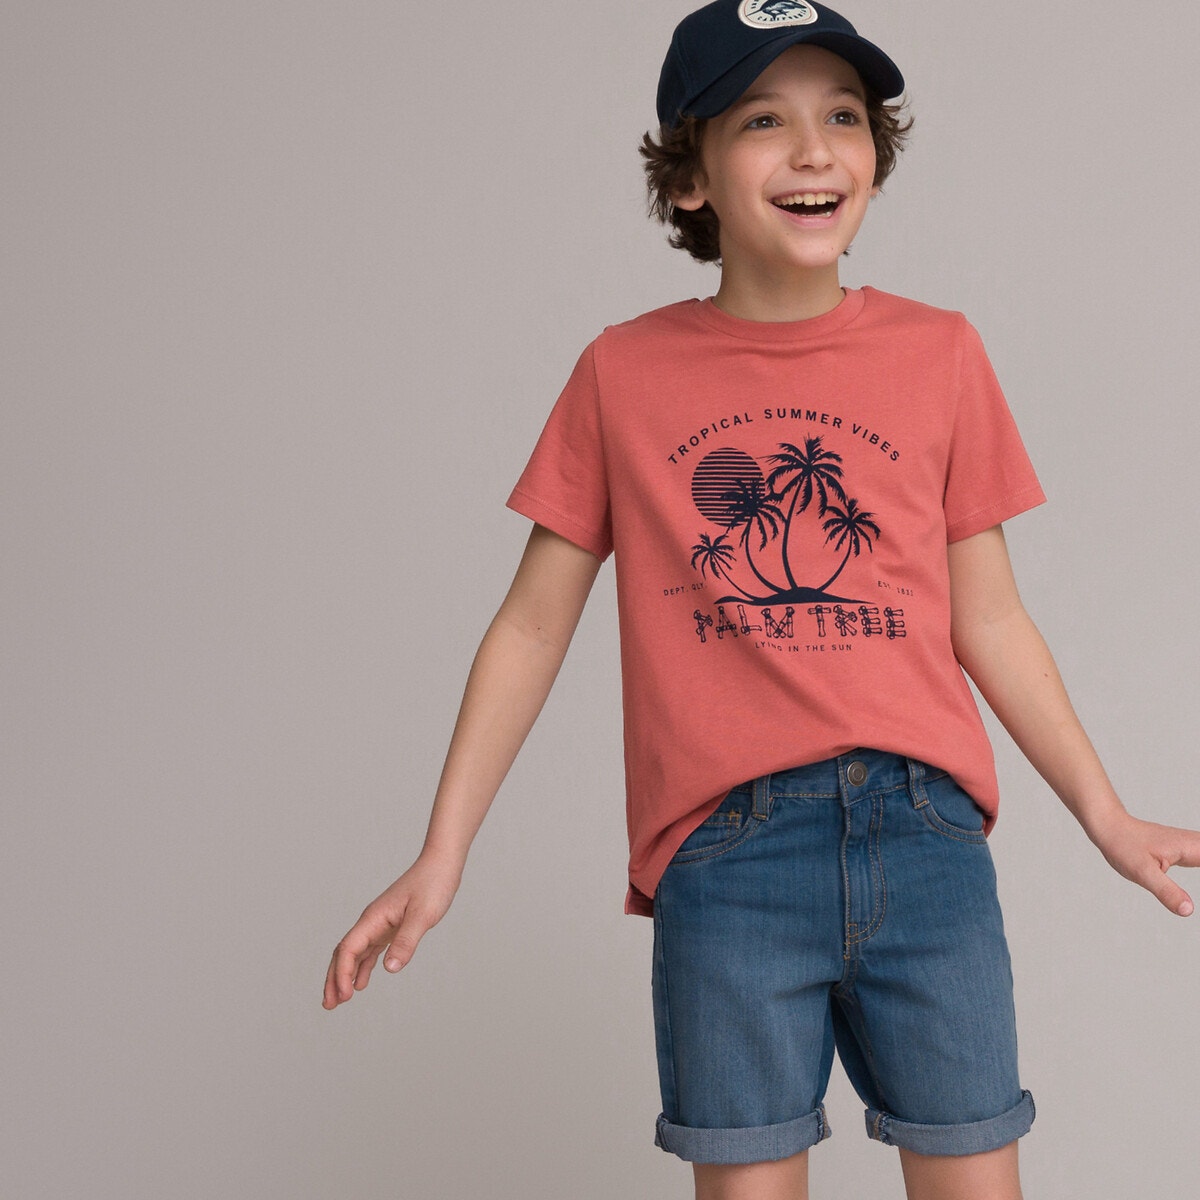 T-shirt από οργανικό βαμβάκι με μοτίβο φοίνικες, 3-12 ετών